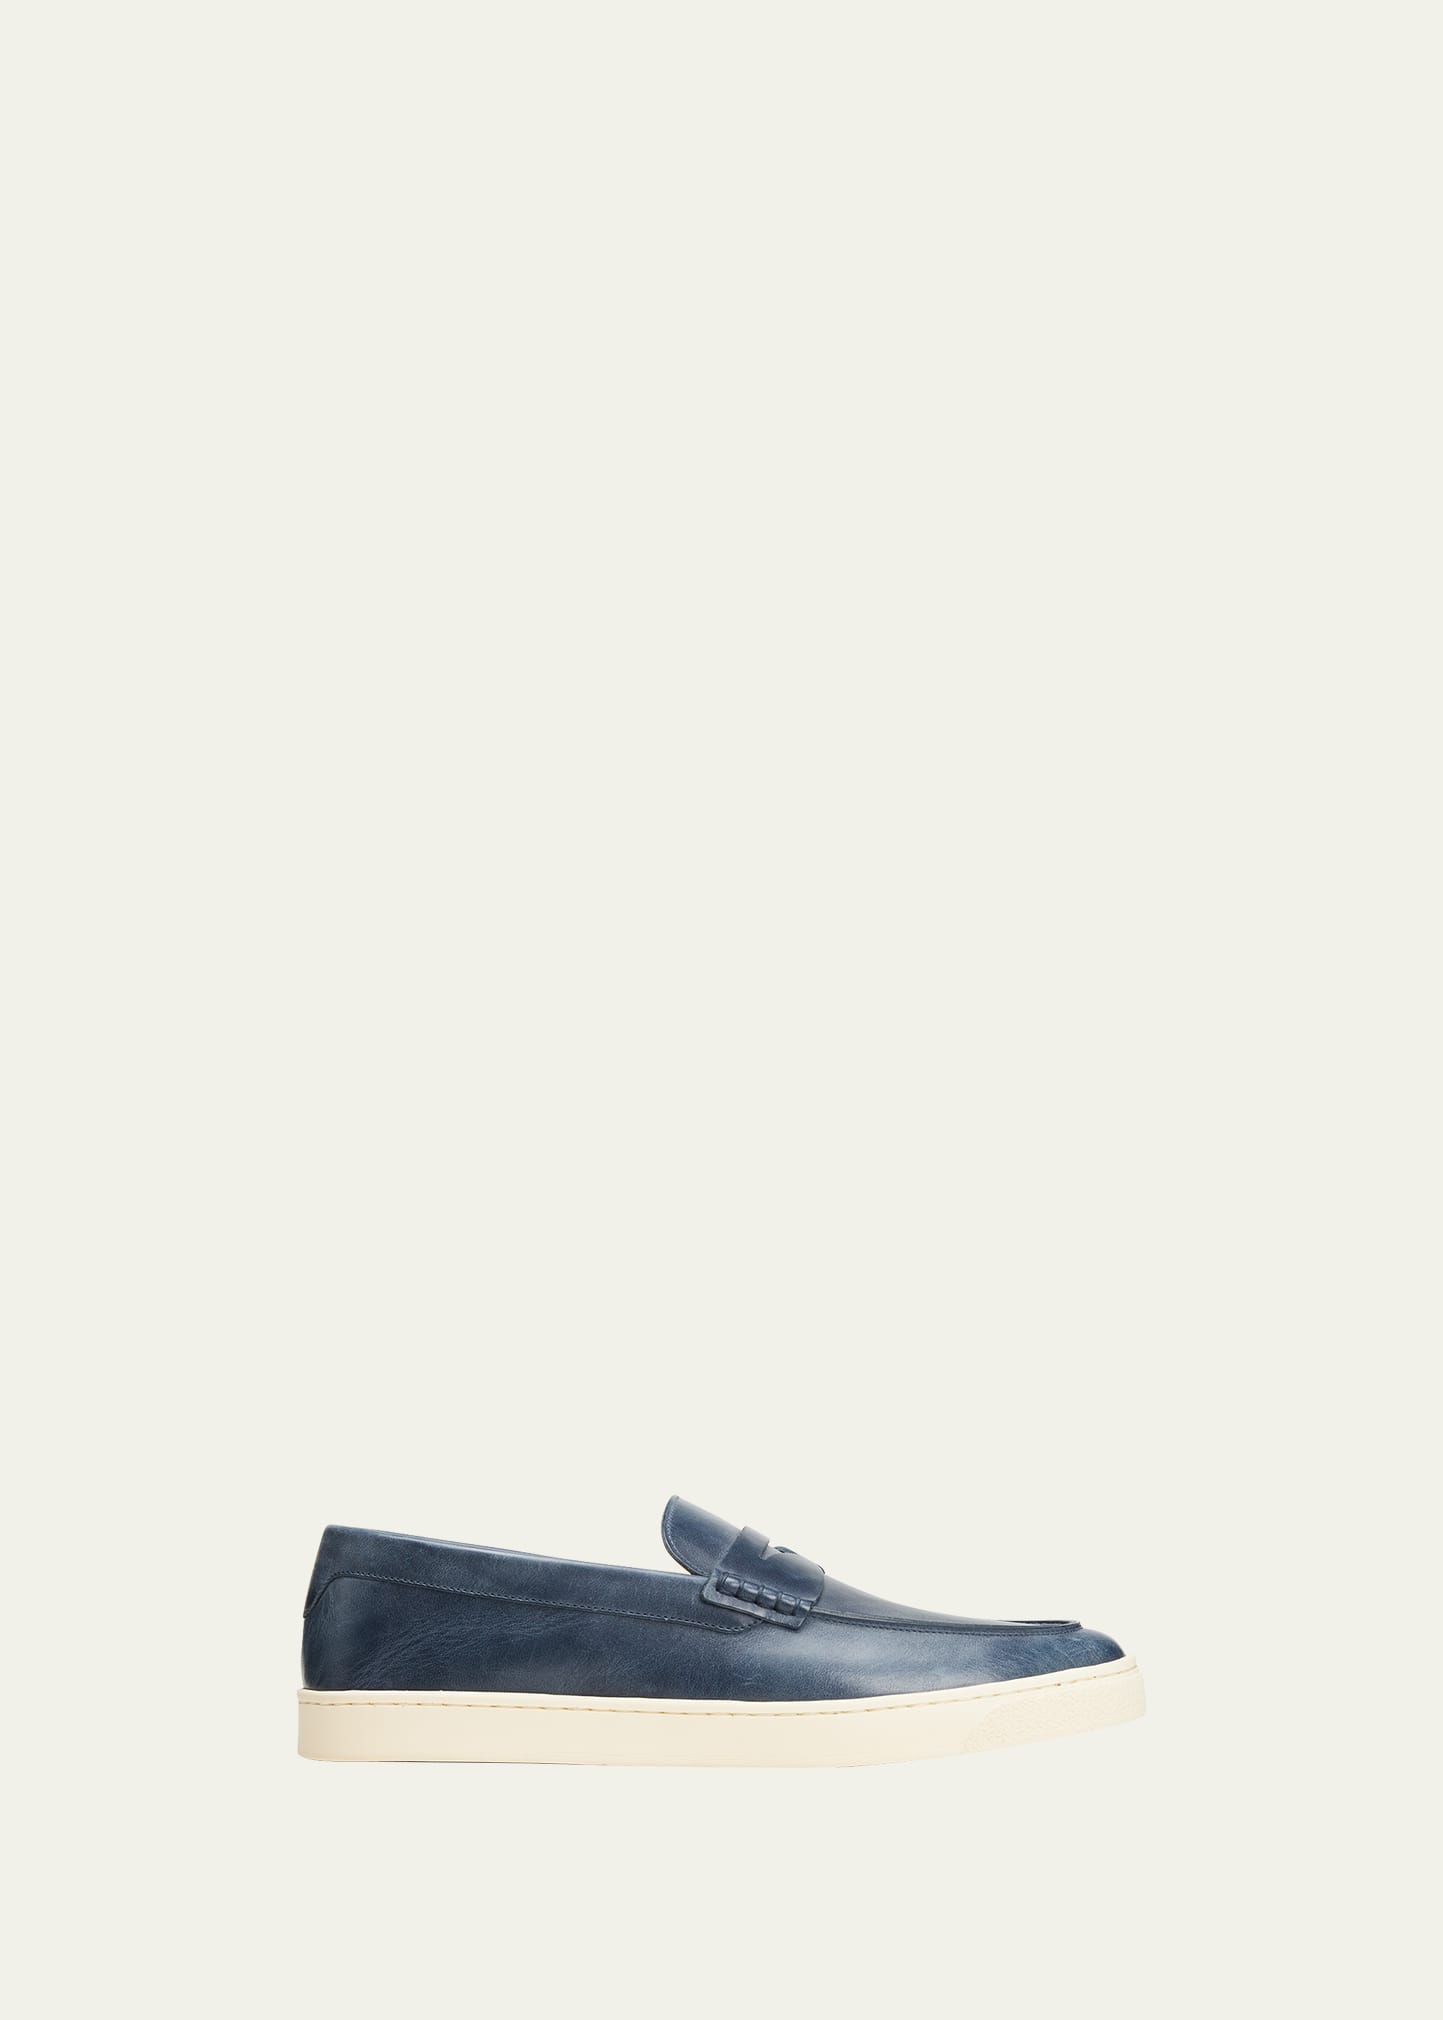 Moc Toe Leather Shoes | bergdorfgoodman.com